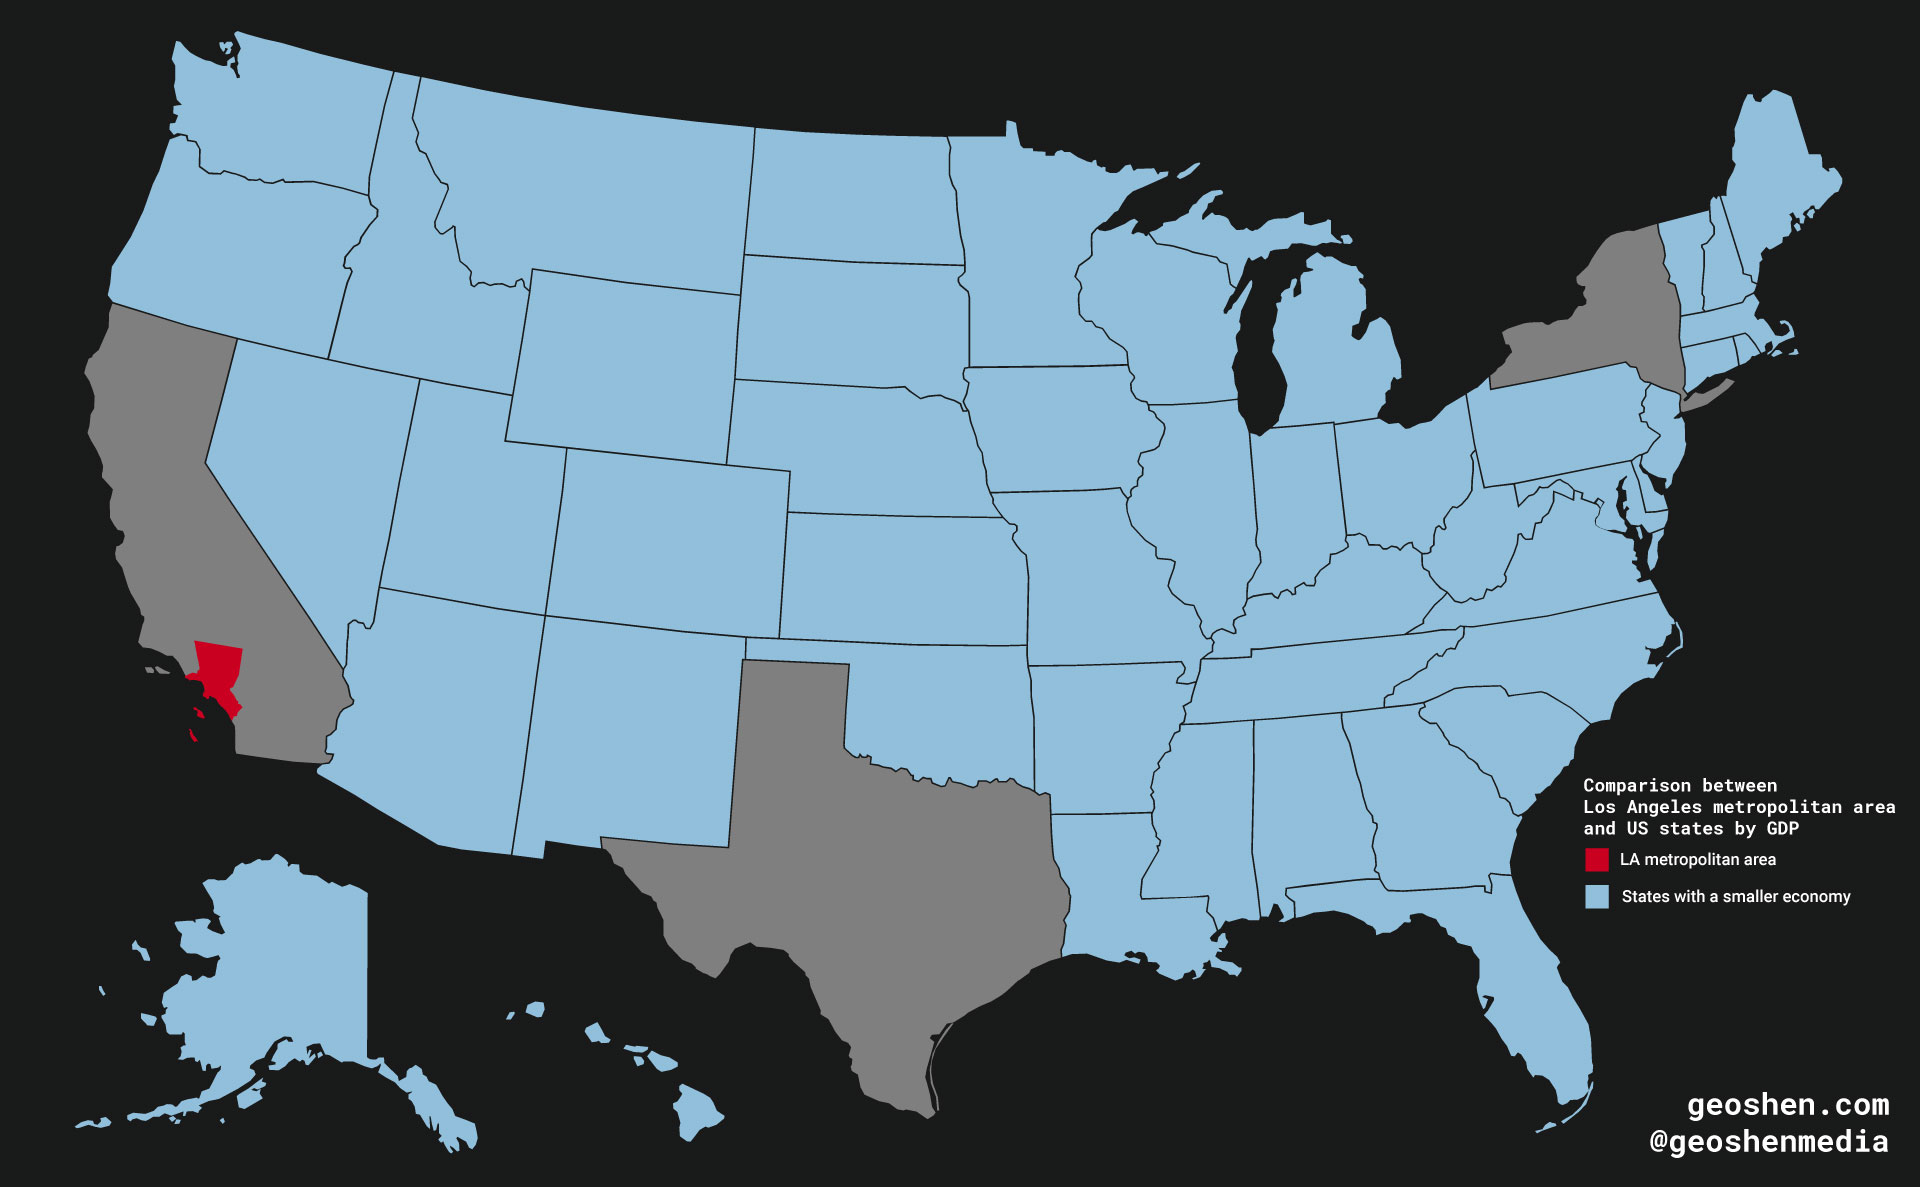 map of LA Metropolitan area's economy compared to US states